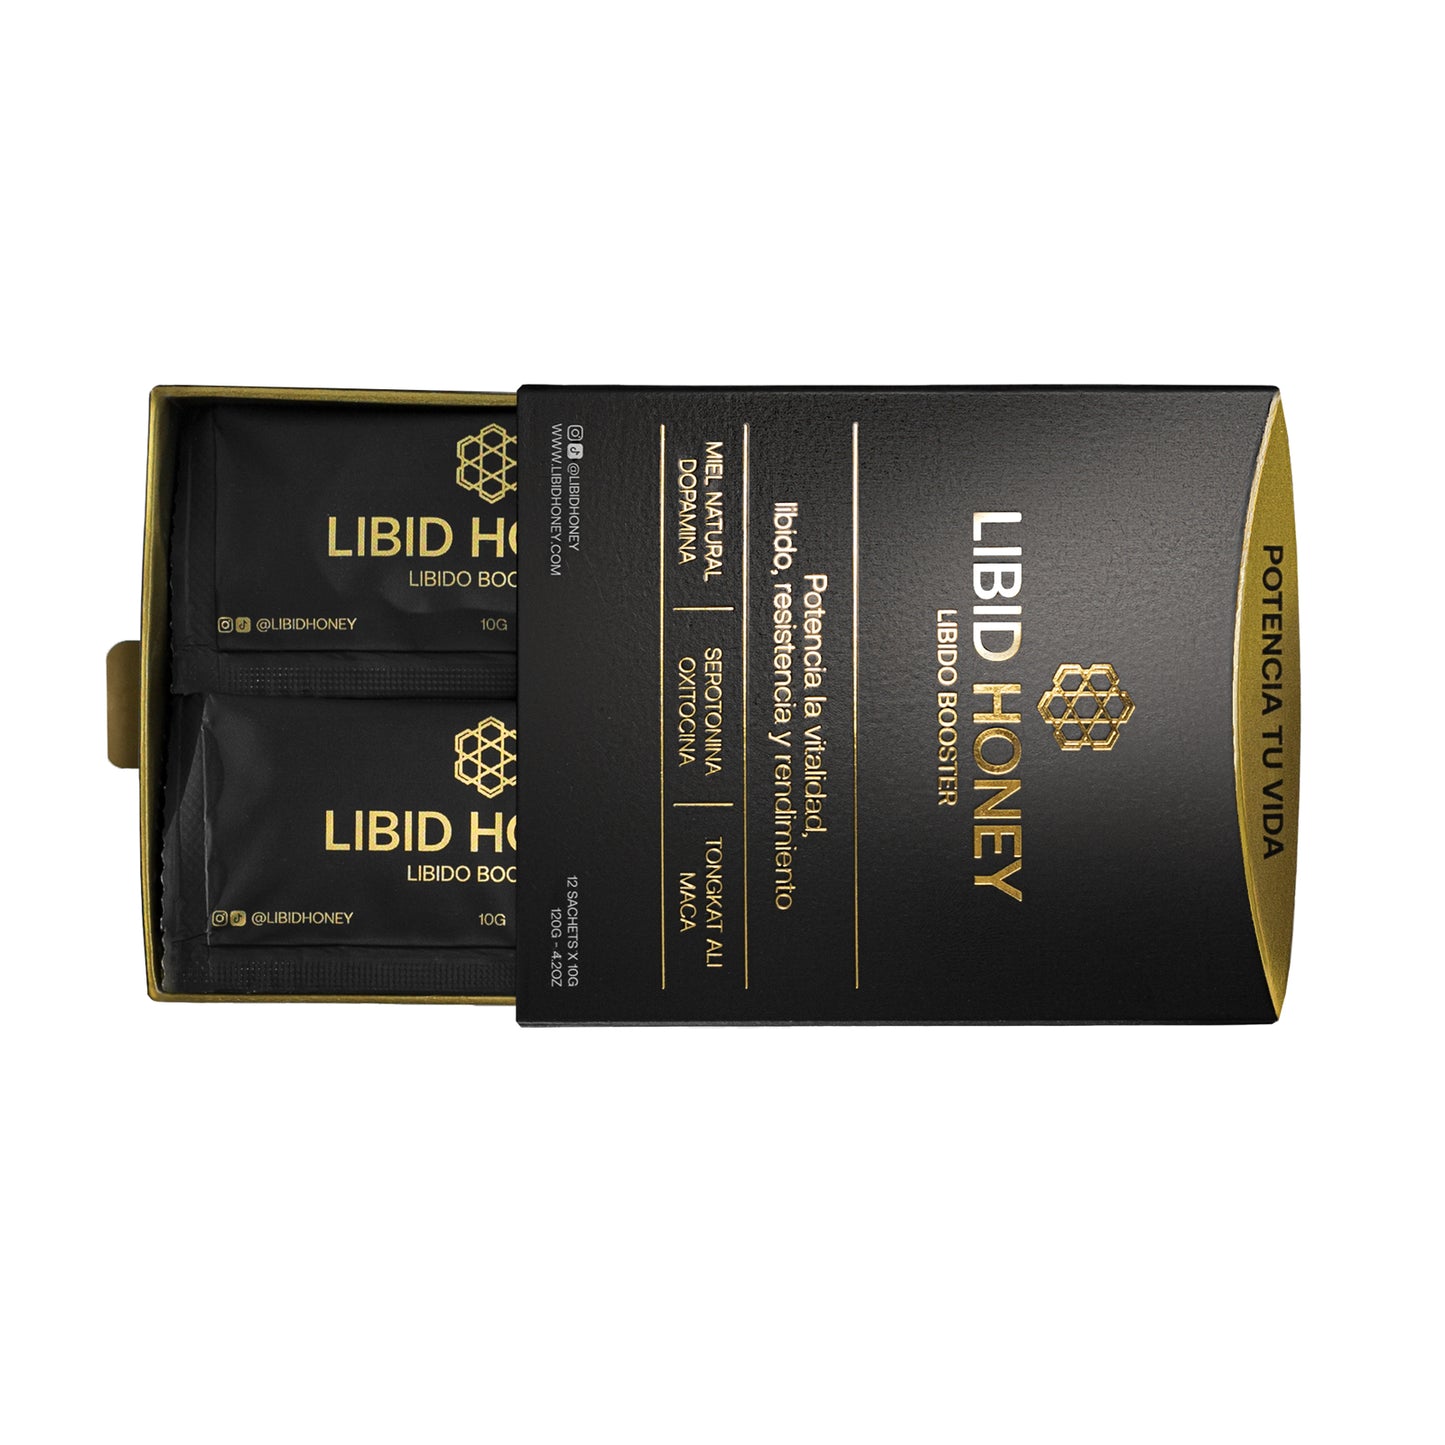 Libid Honey box opened. Libido Booster. Contains 12 sachet. 10 G each.